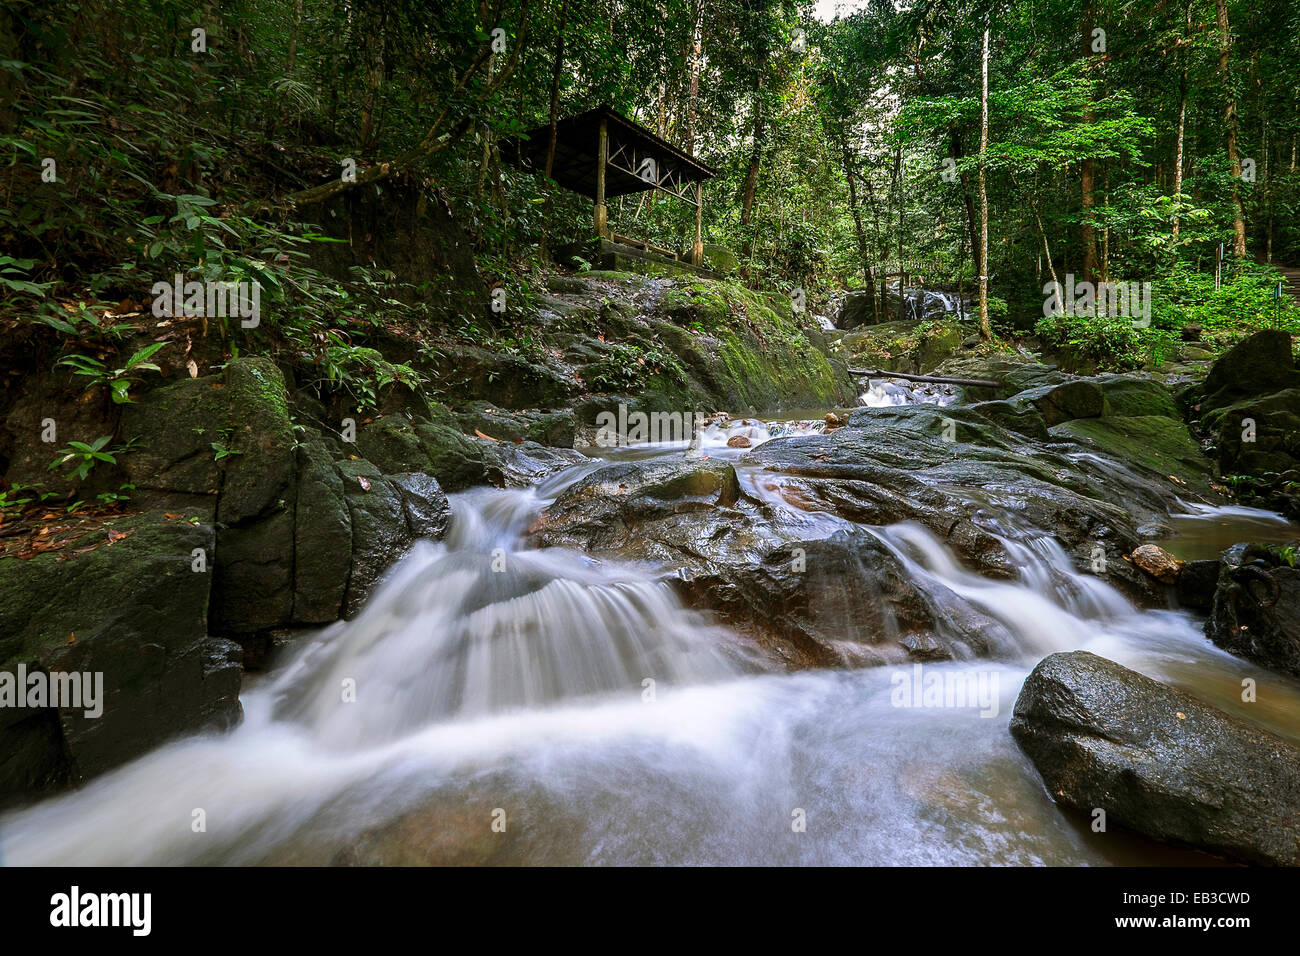 Malaysia, Selangor State, Semenyih, Sungai Tekala Recreational Forest, Mountain river Stock Photo